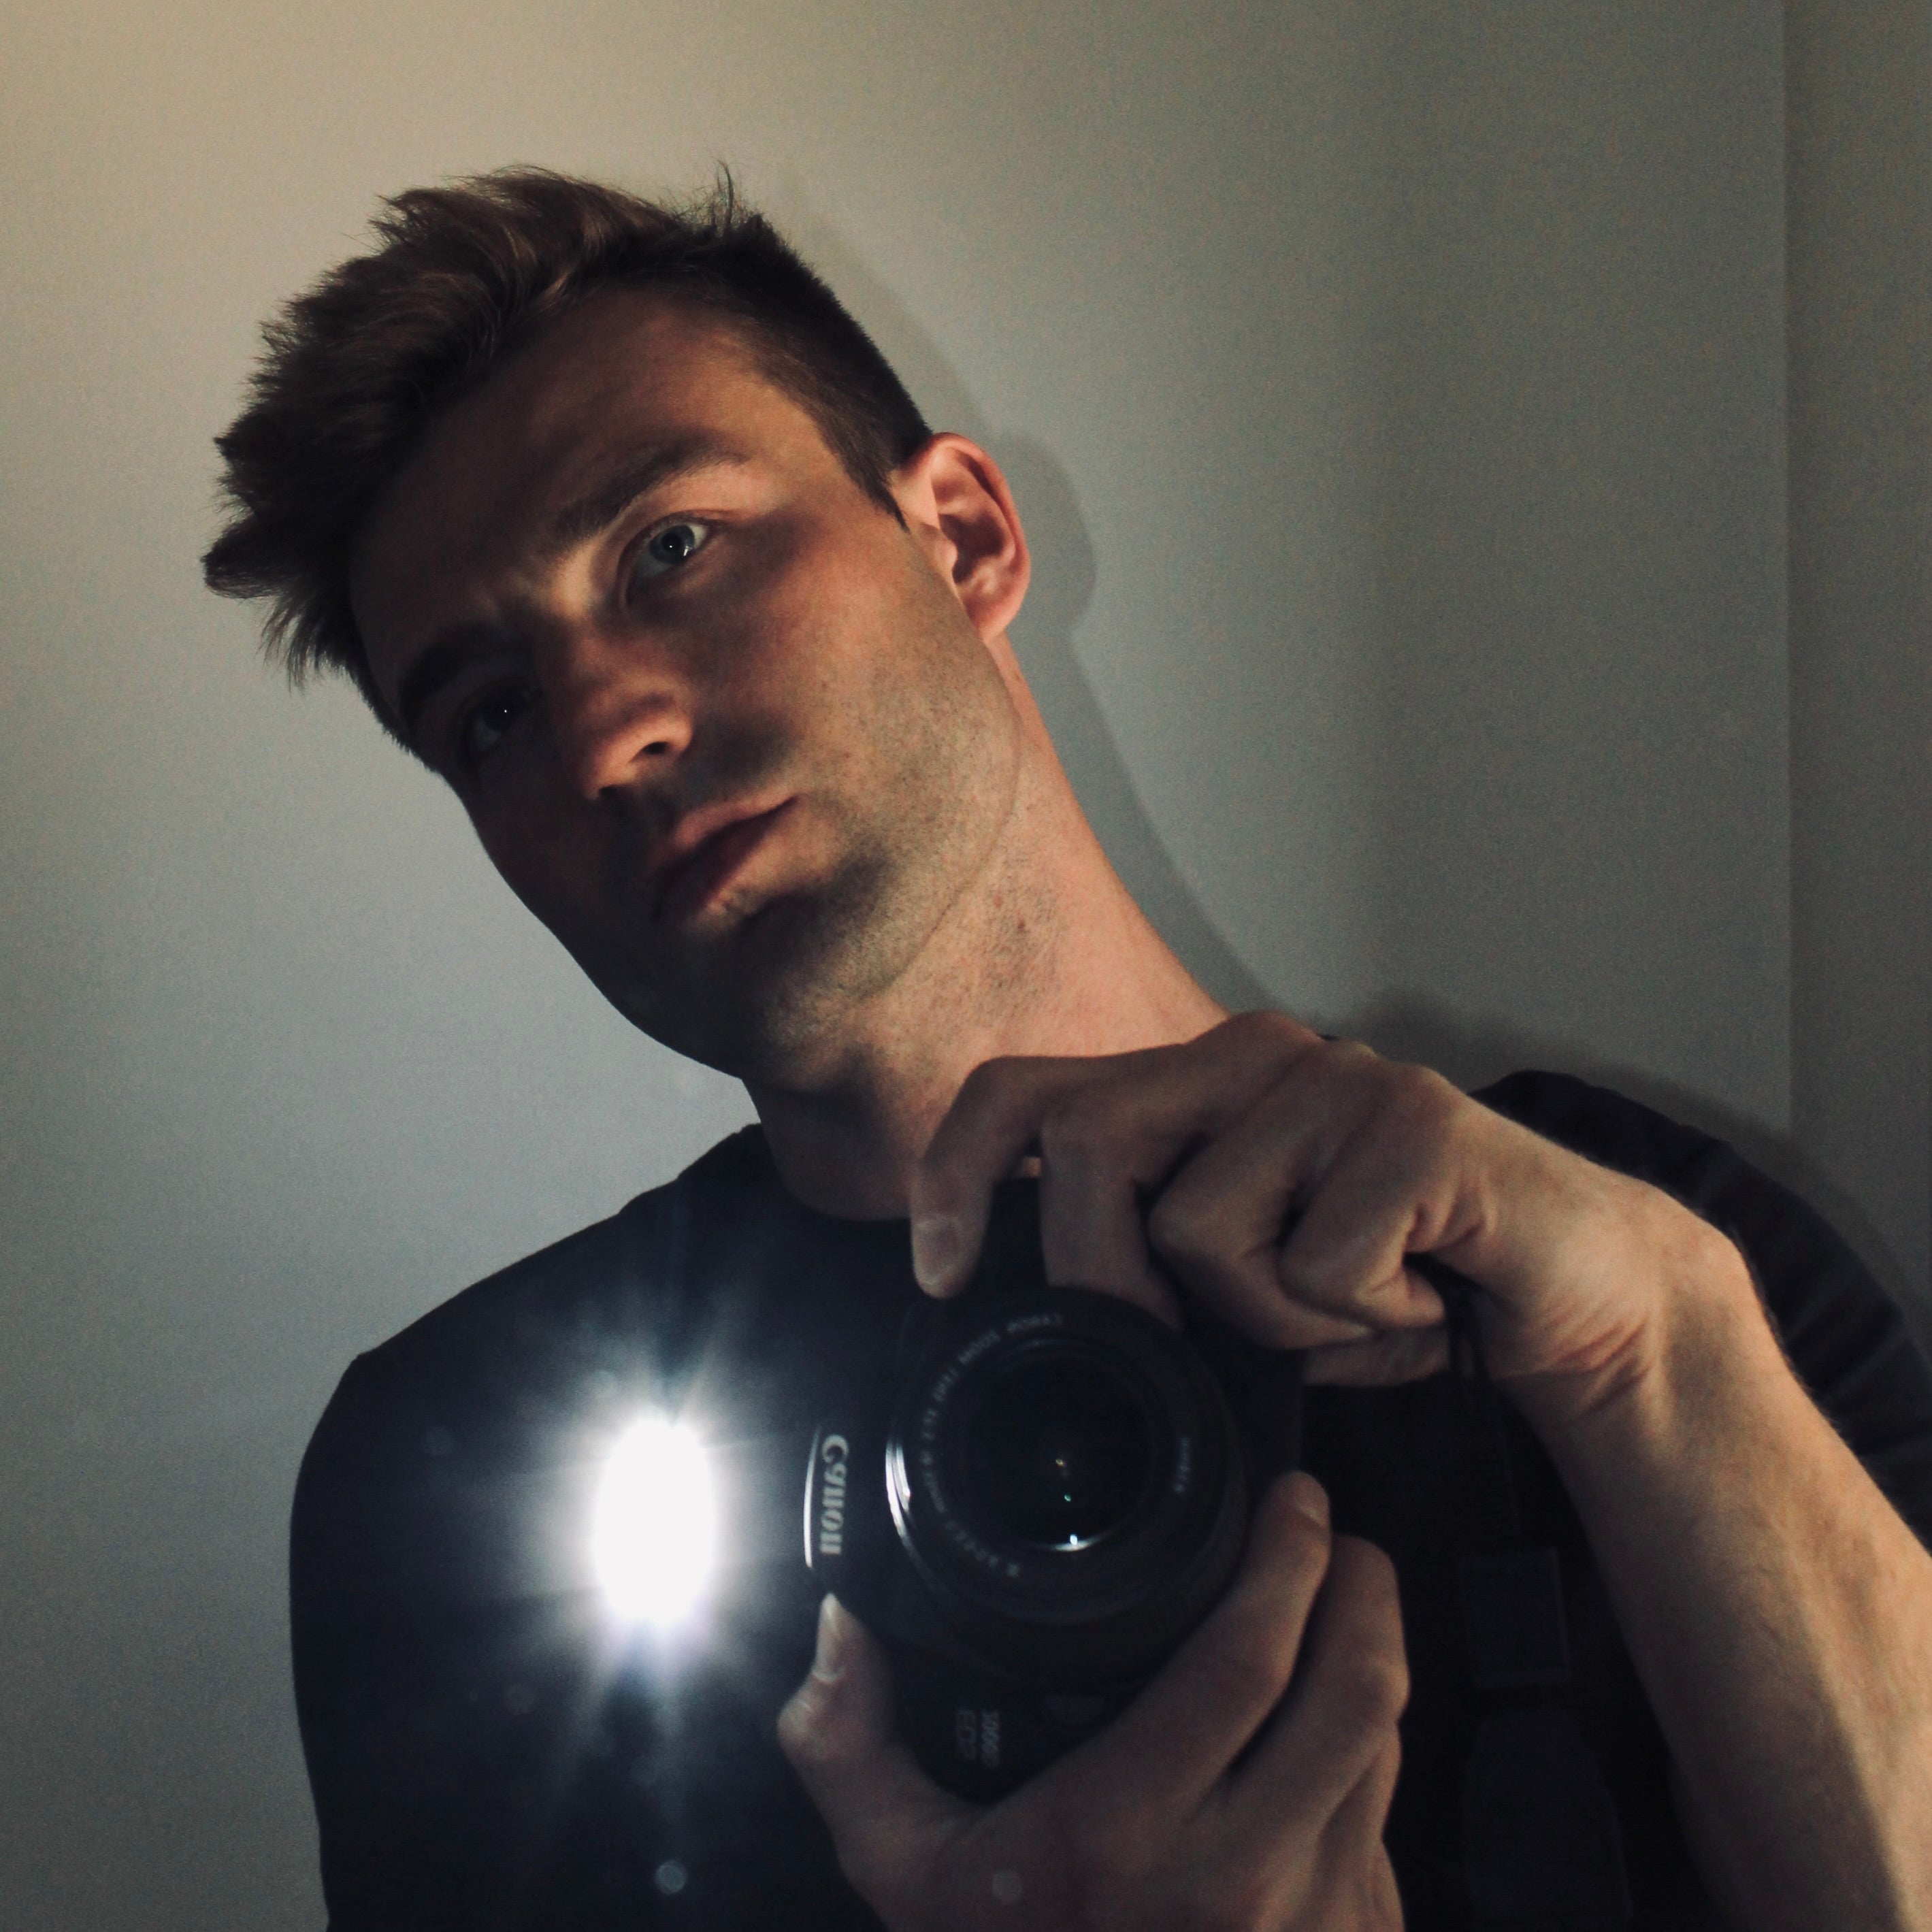 A selfie of LEHMANN DESIGN HAUS Founder Andrew Lehmann using cannon camera in mirror.